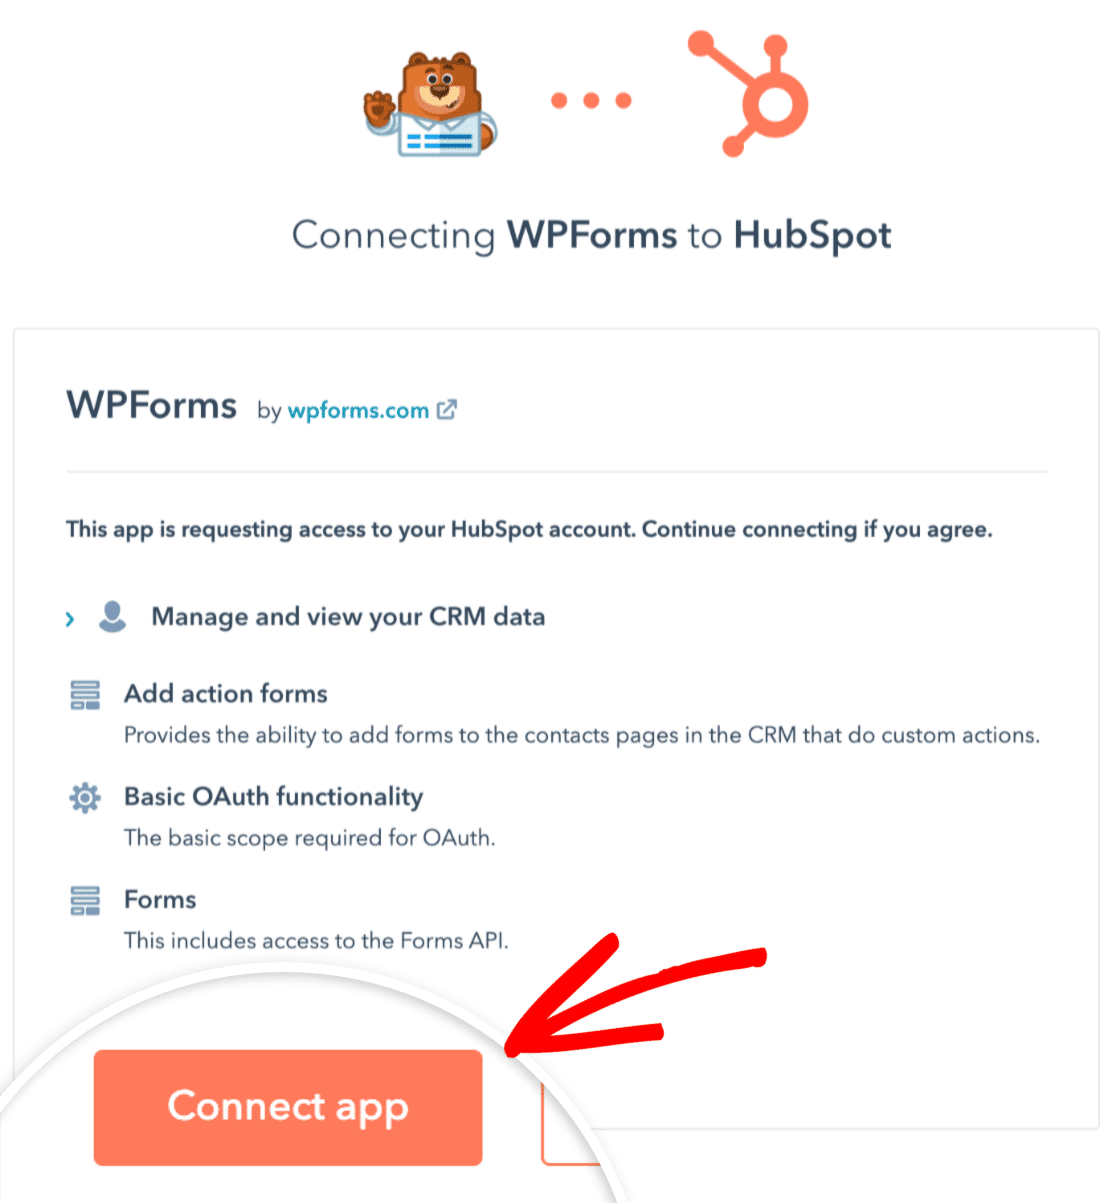 WPForms Access Permissions for HubSpot